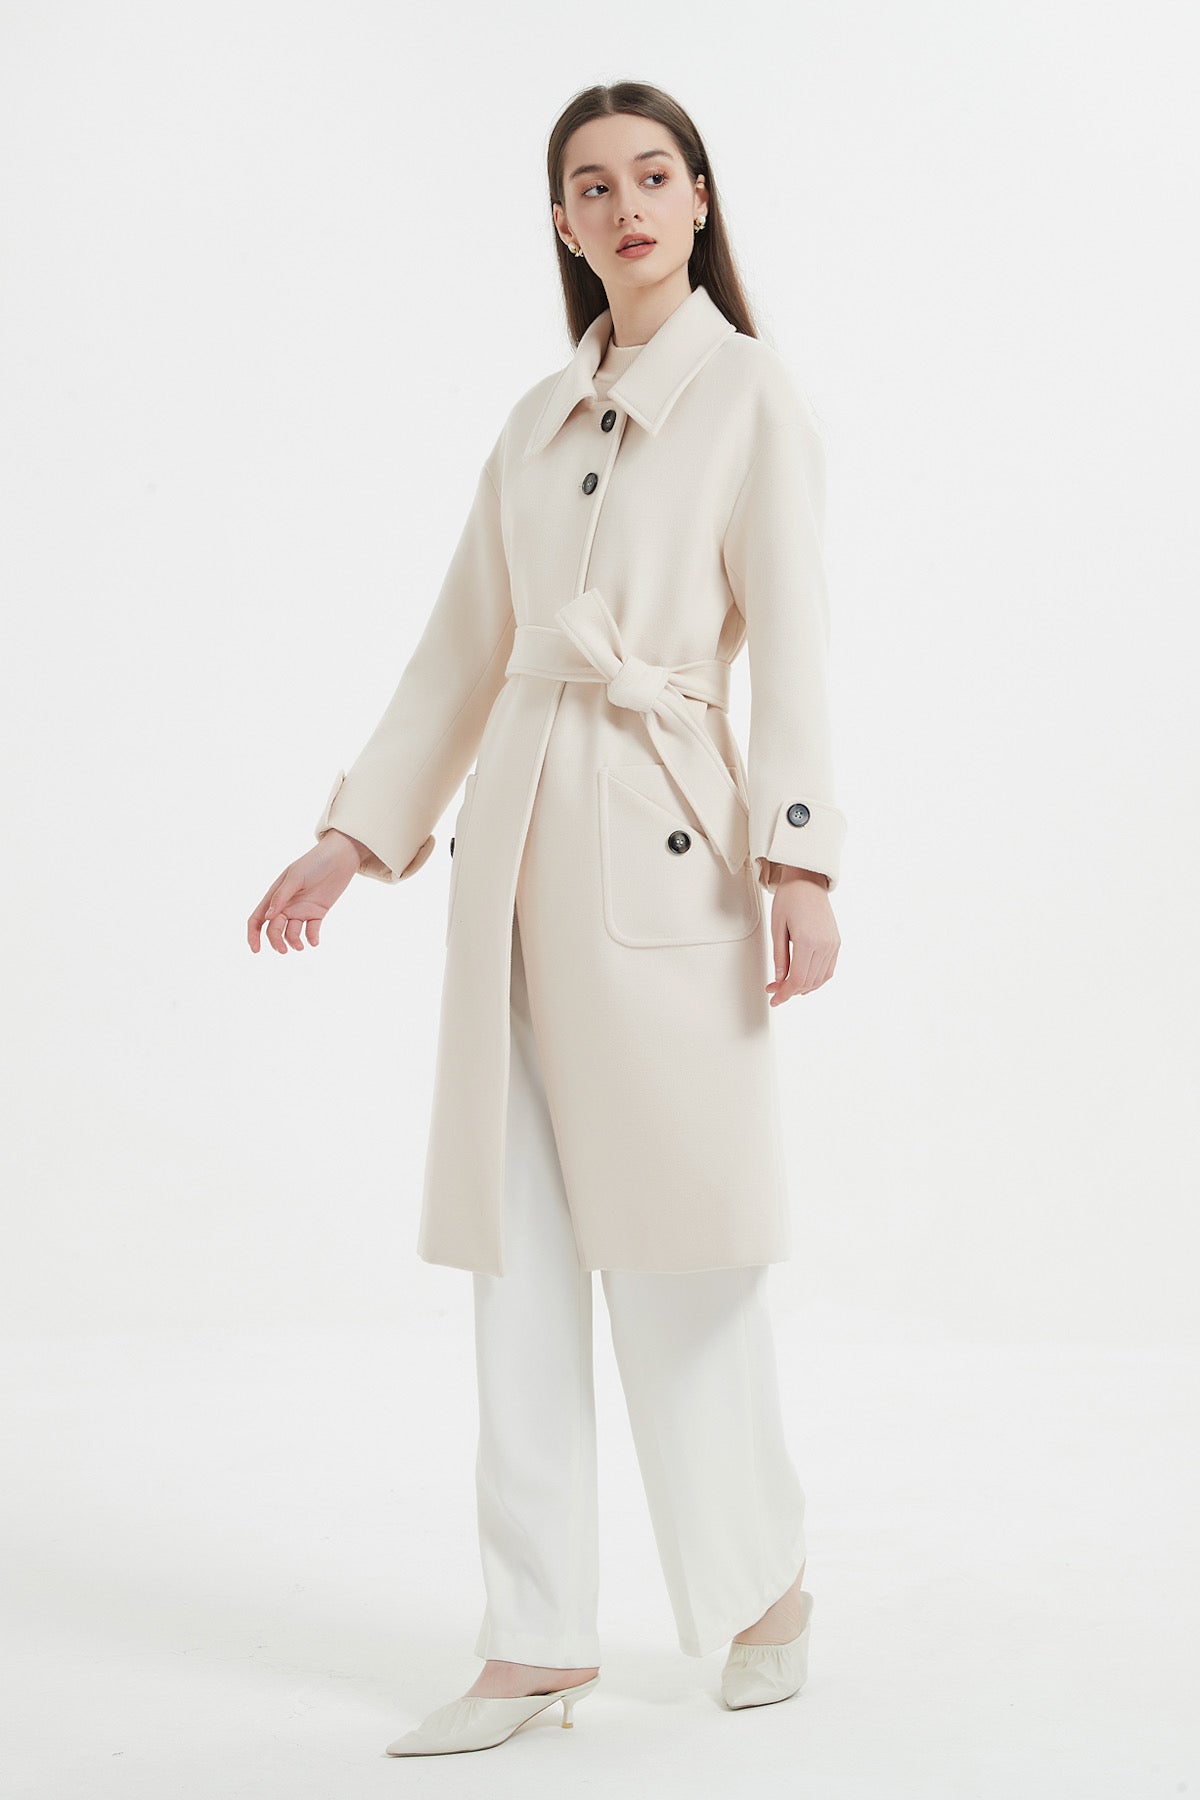 SKYE Shop Chic Modern Elegant Timeless Women Clothing French Parisian Minimalist Annabelle Long Wool Coat White 7